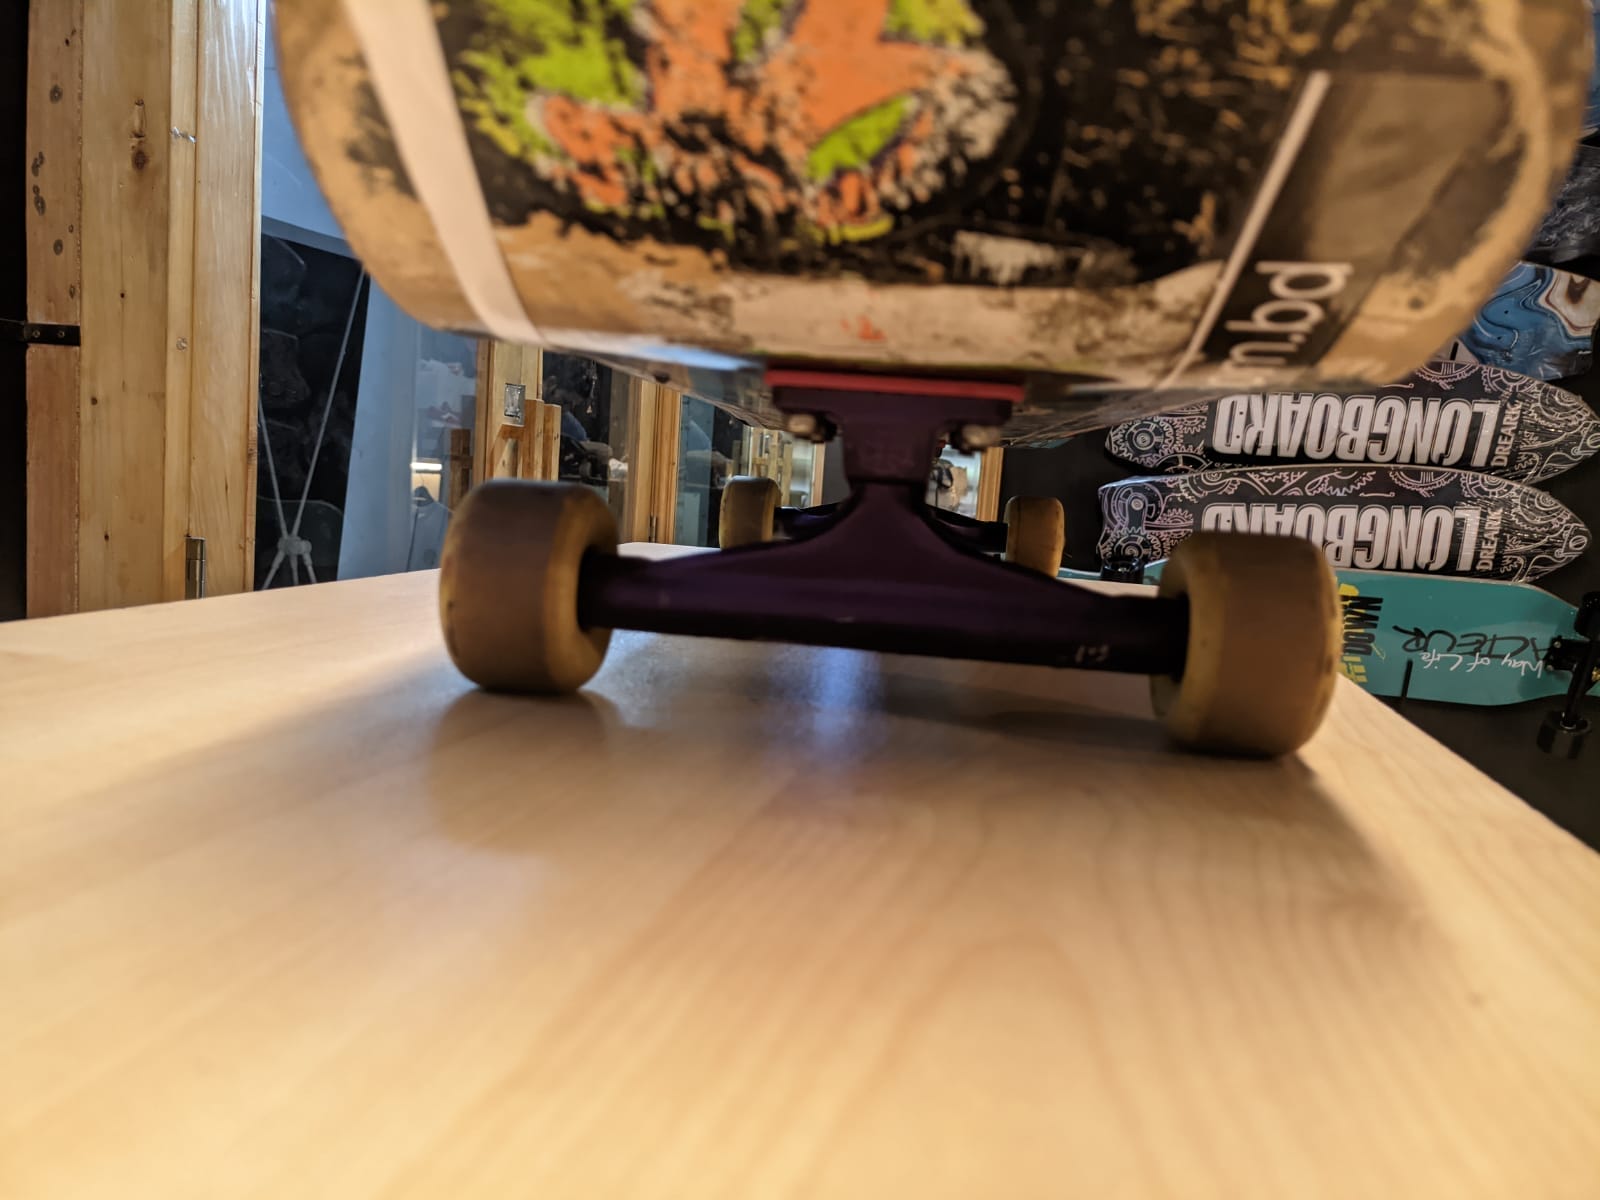 Down side of Kyle's old skateboard